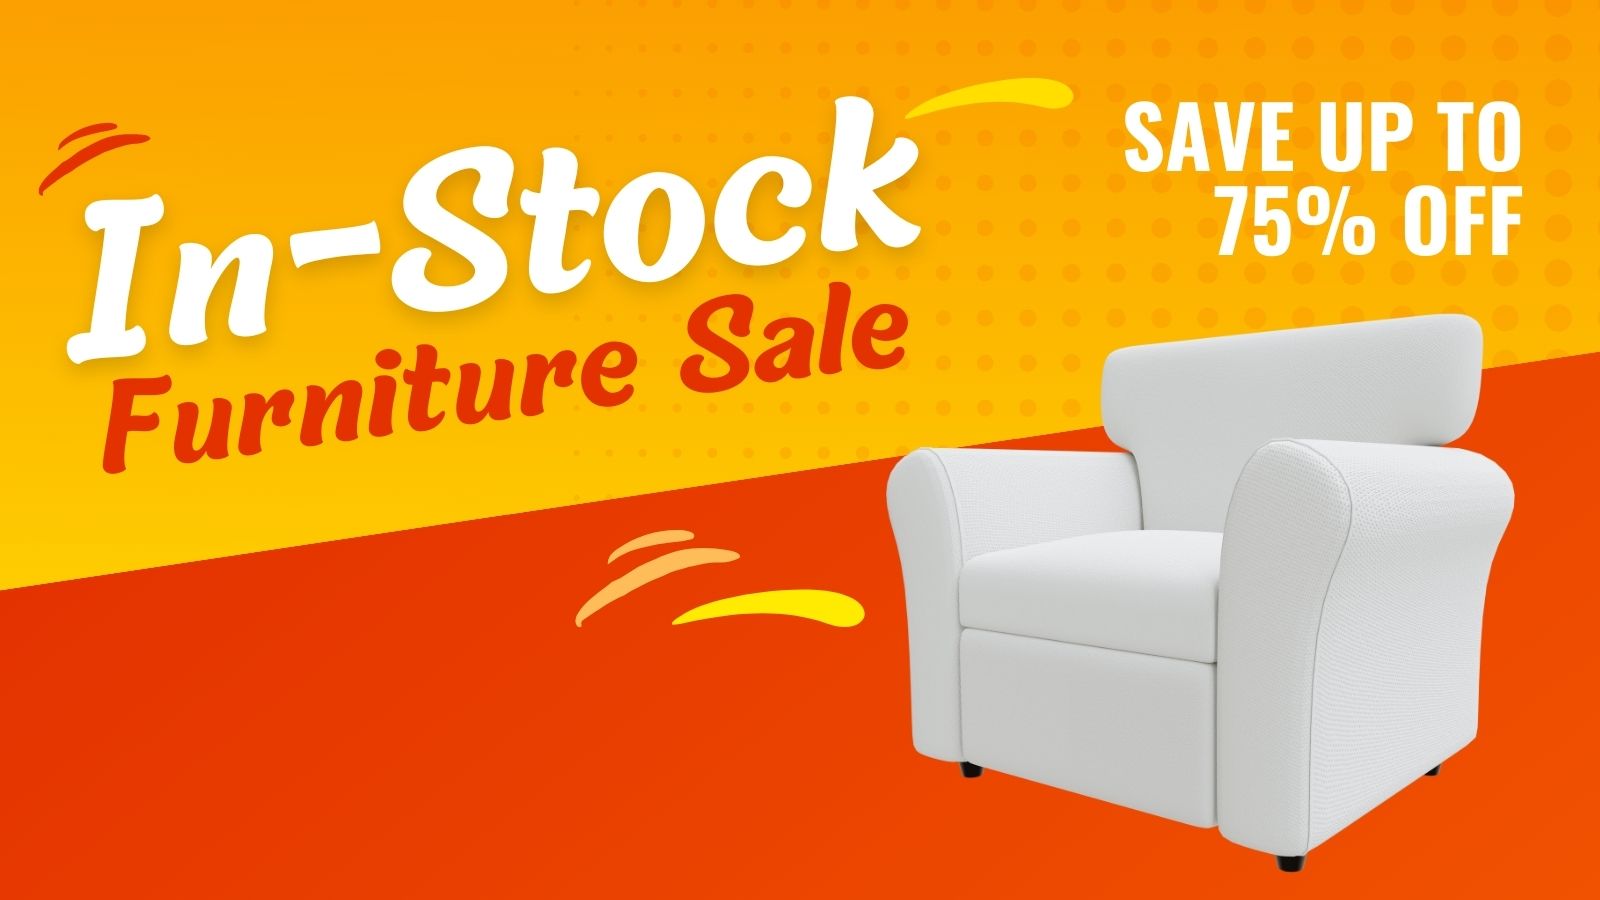 In-Stock Furniture Sale